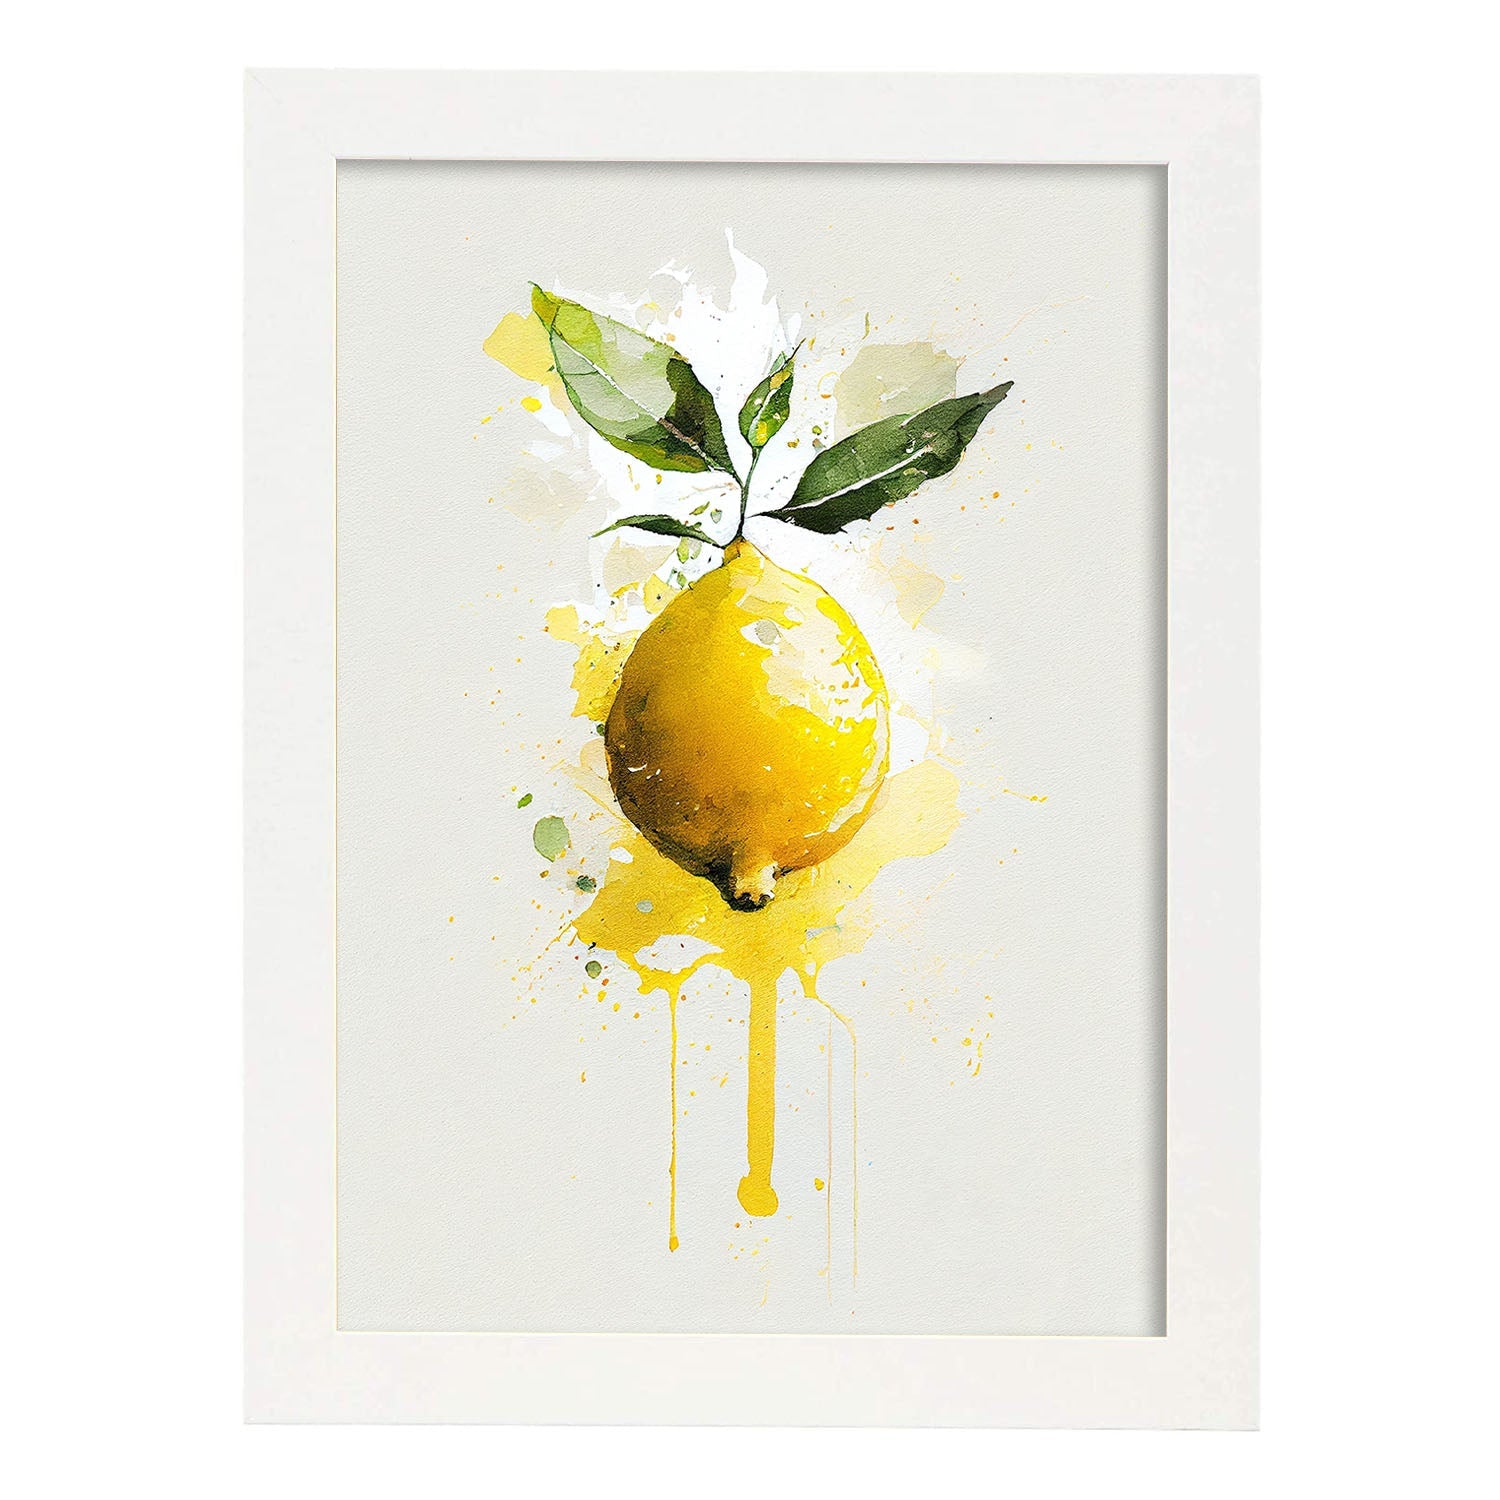 Nacnic minimalist Lemon. Aesthetic Wall Art Prints for Bedroom or Living Room Design.-Artwork-Nacnic-A4-Marco Blanco-Nacnic Estudio SL